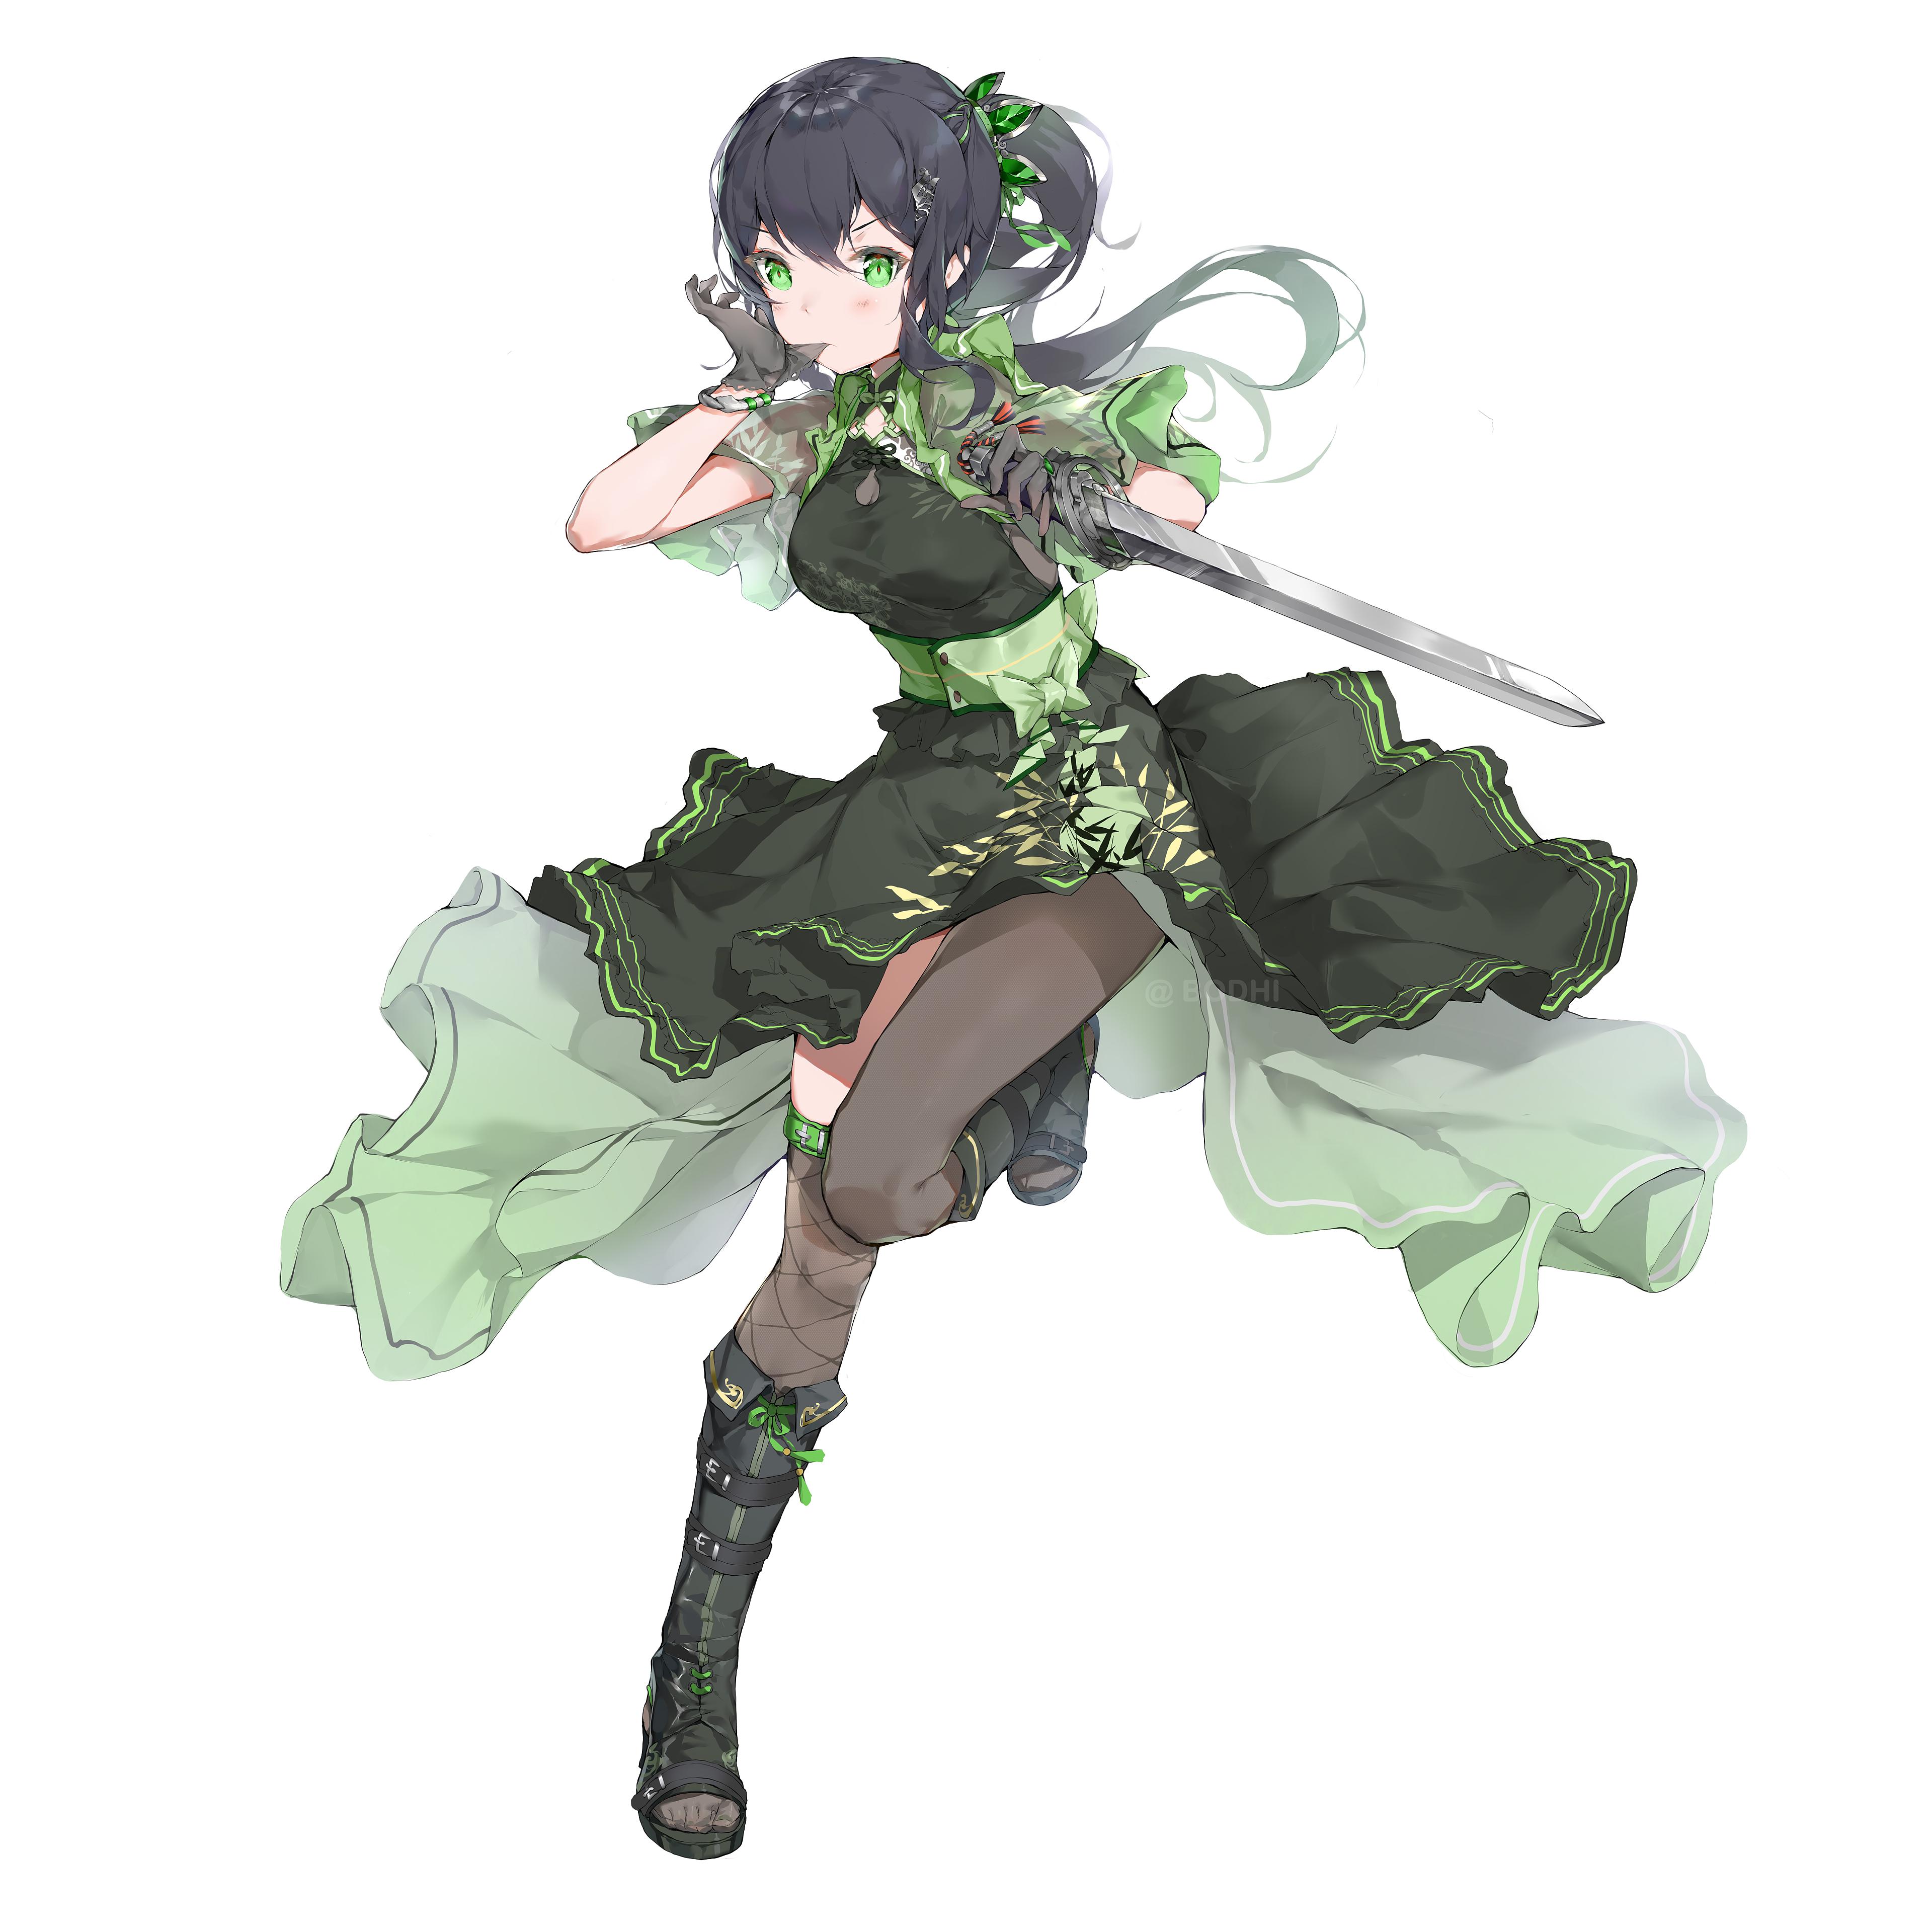 Anime 3840x3840 BODHI Bodhi Wushushenghua anime girls green eyes dress sword weapon gloves simple background minimalism